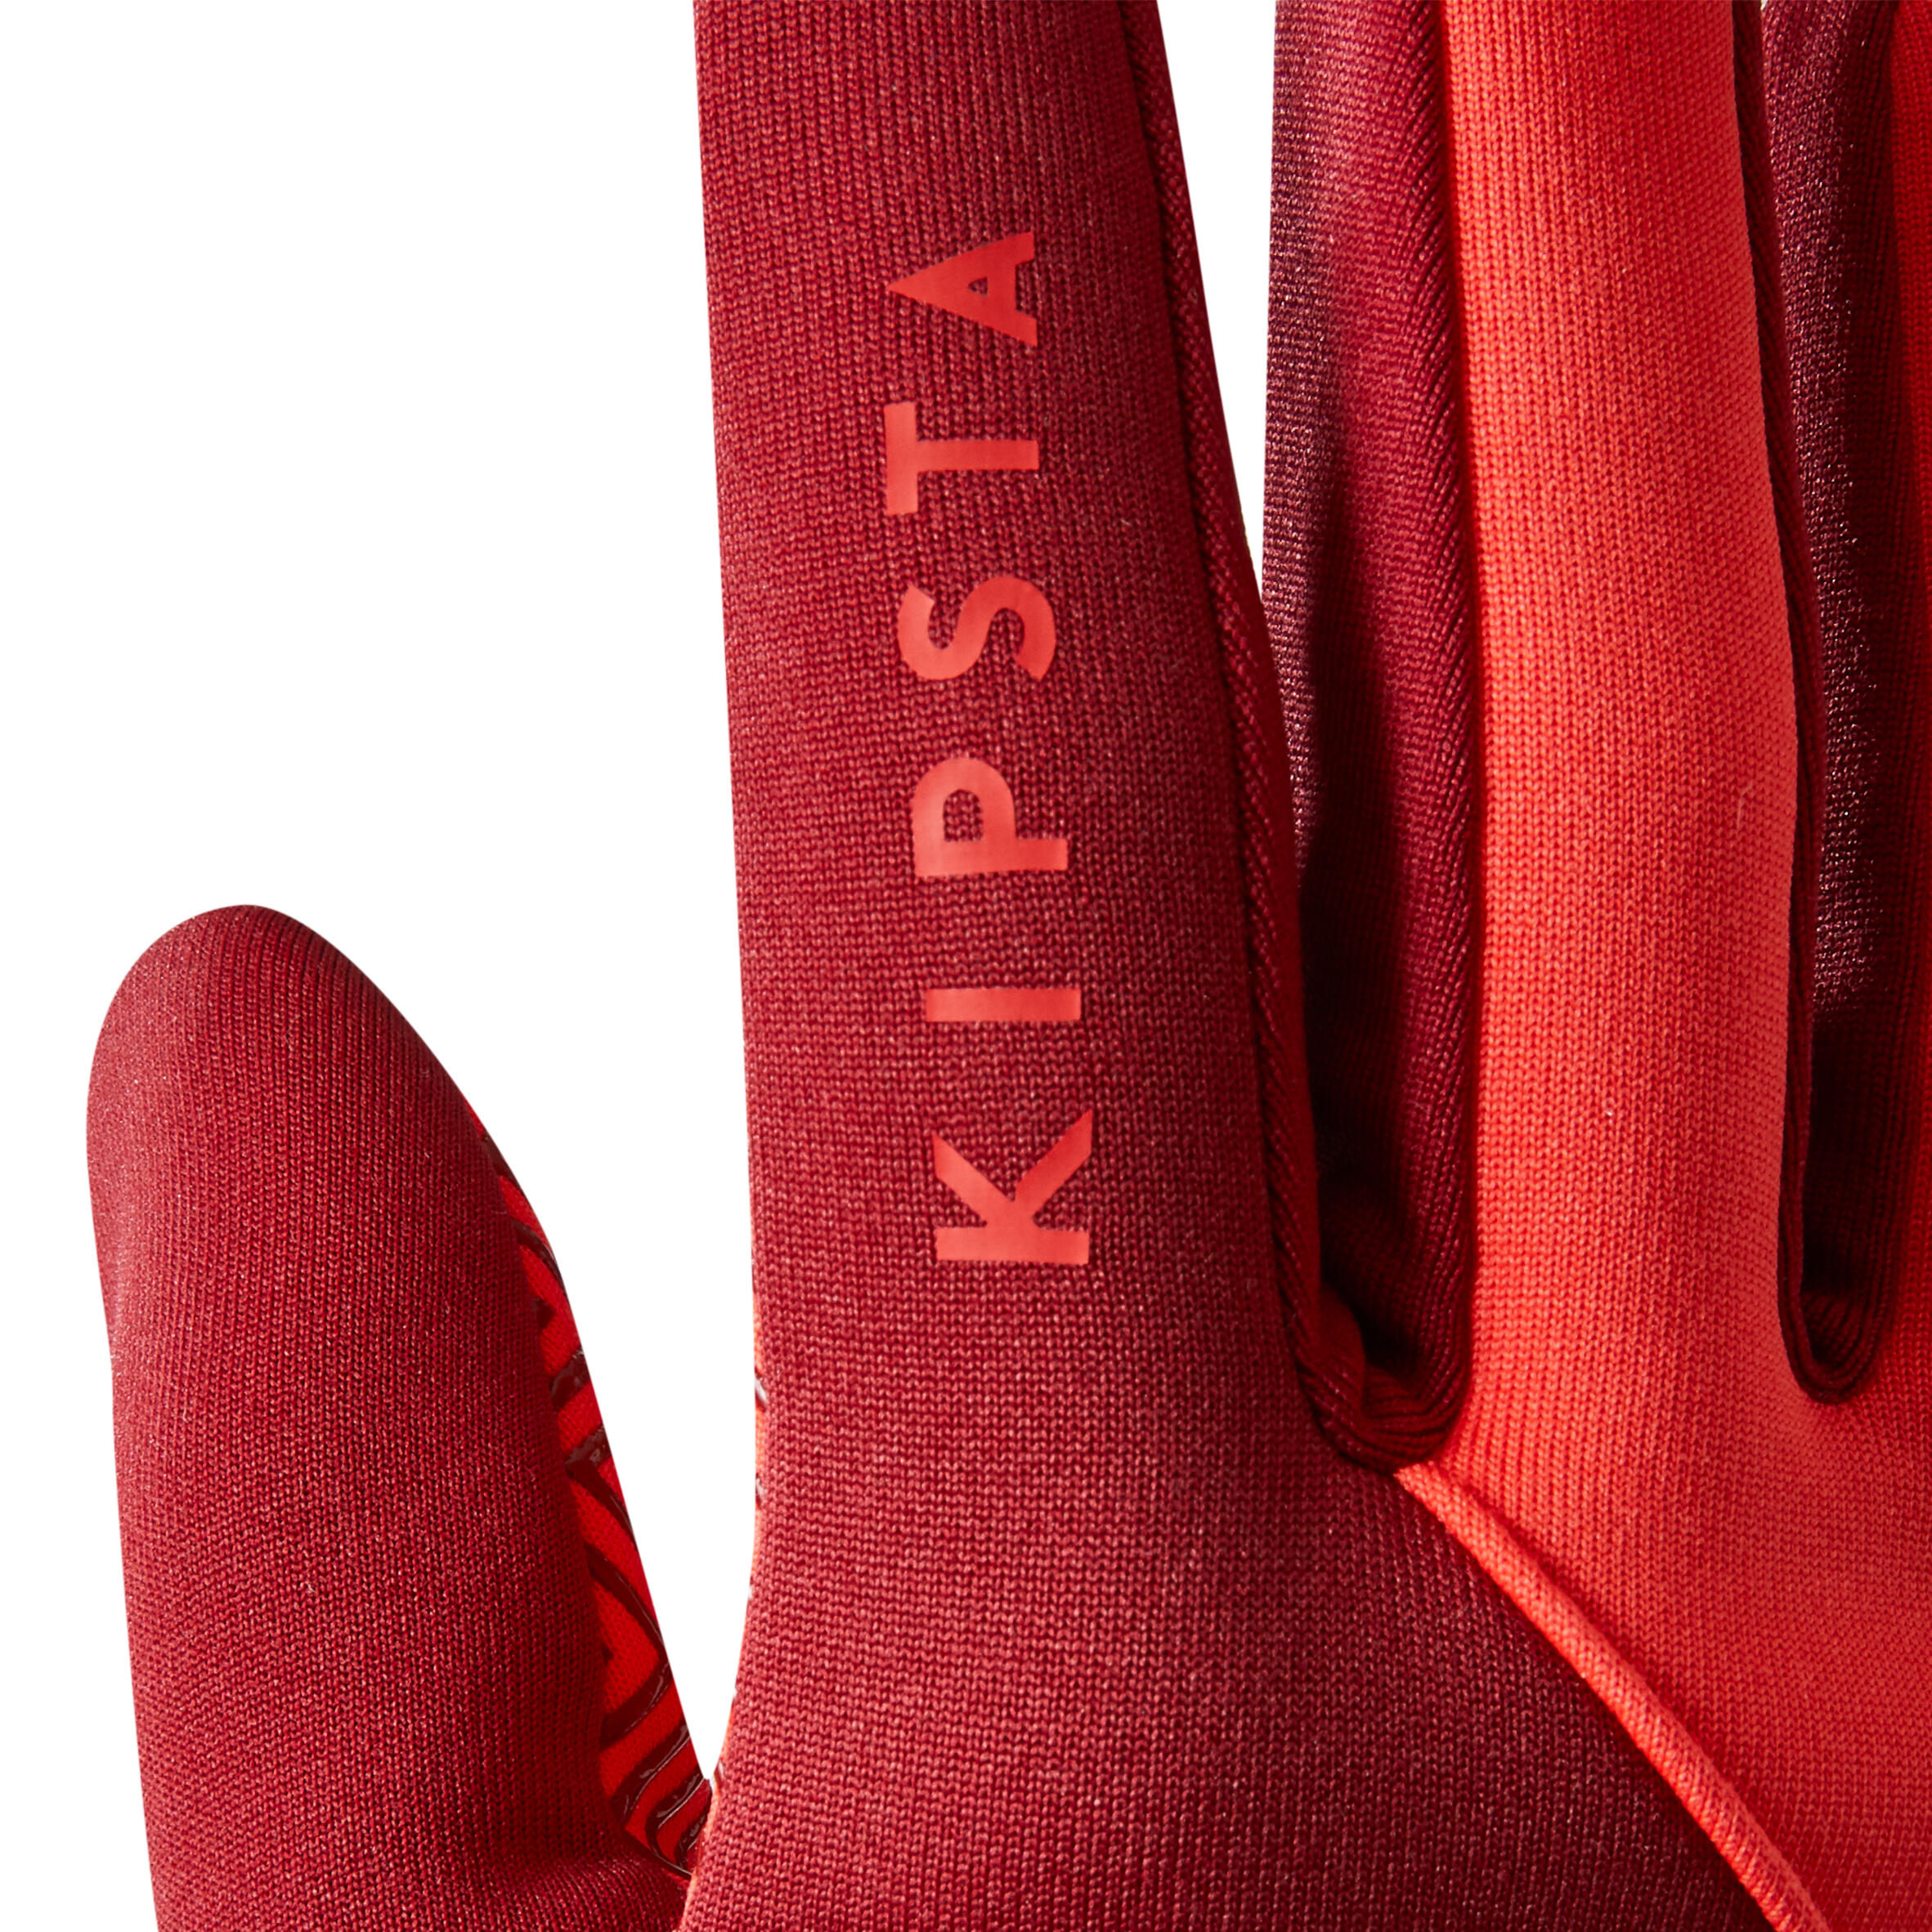 Adult Football Gloves Keepdry 500 - Burgundy 5/5